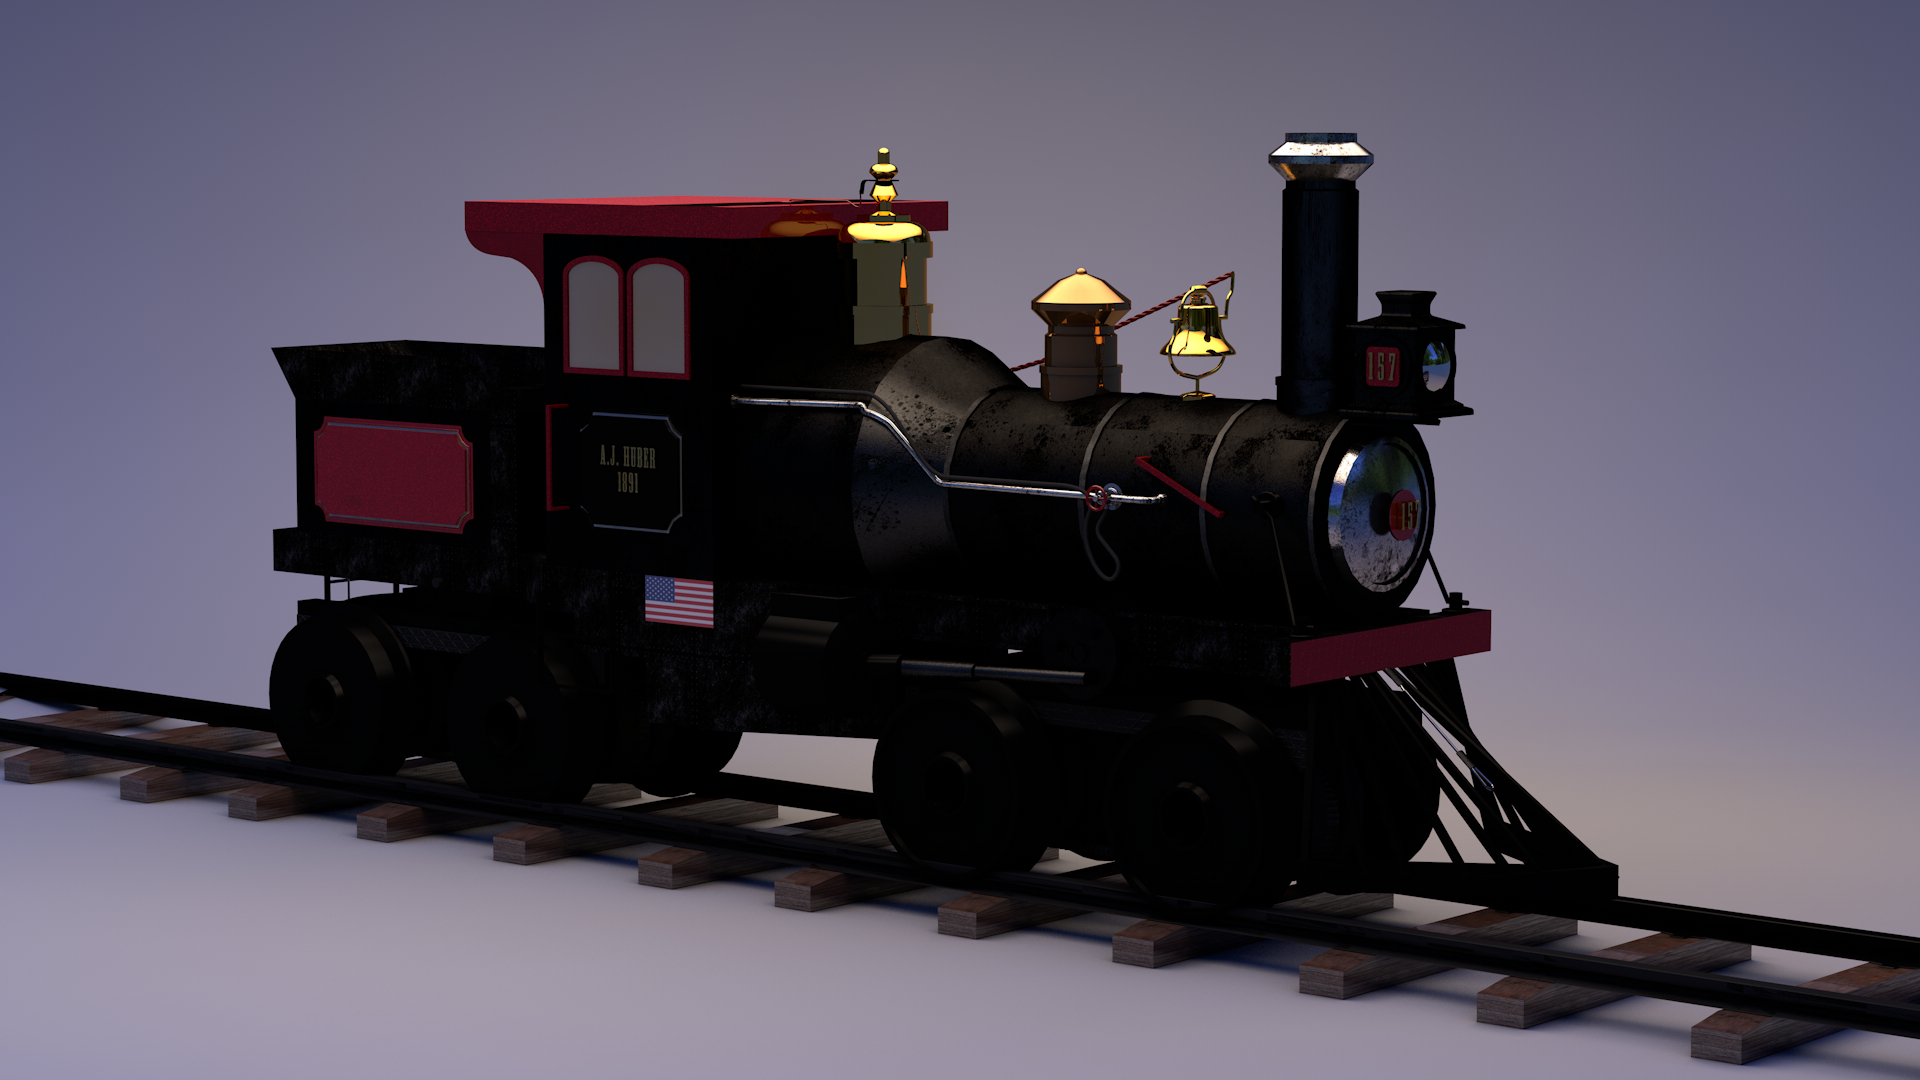 steam locomotive railway in Cinema 4d maxwell render image